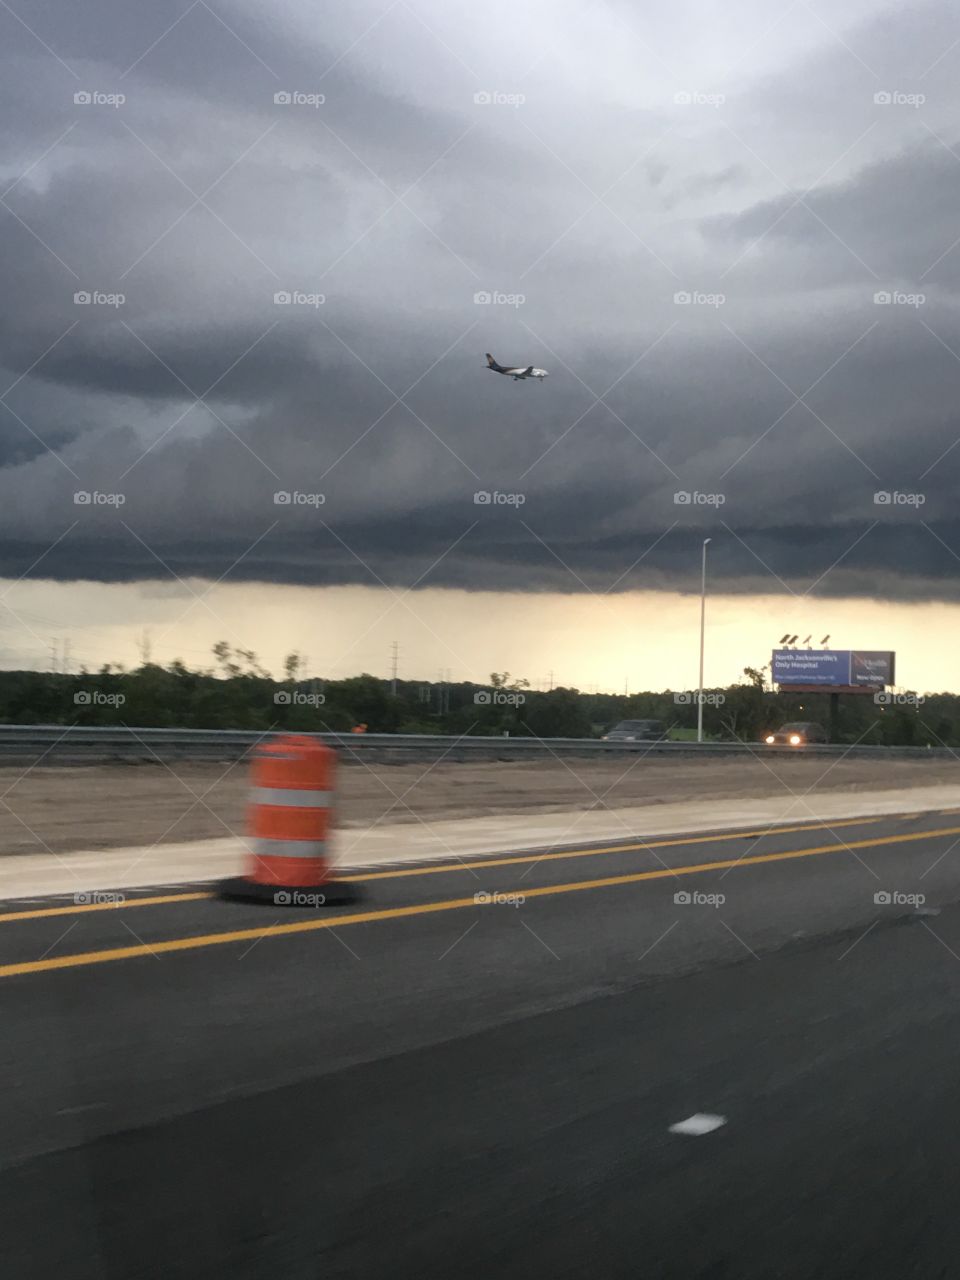 Through the storm